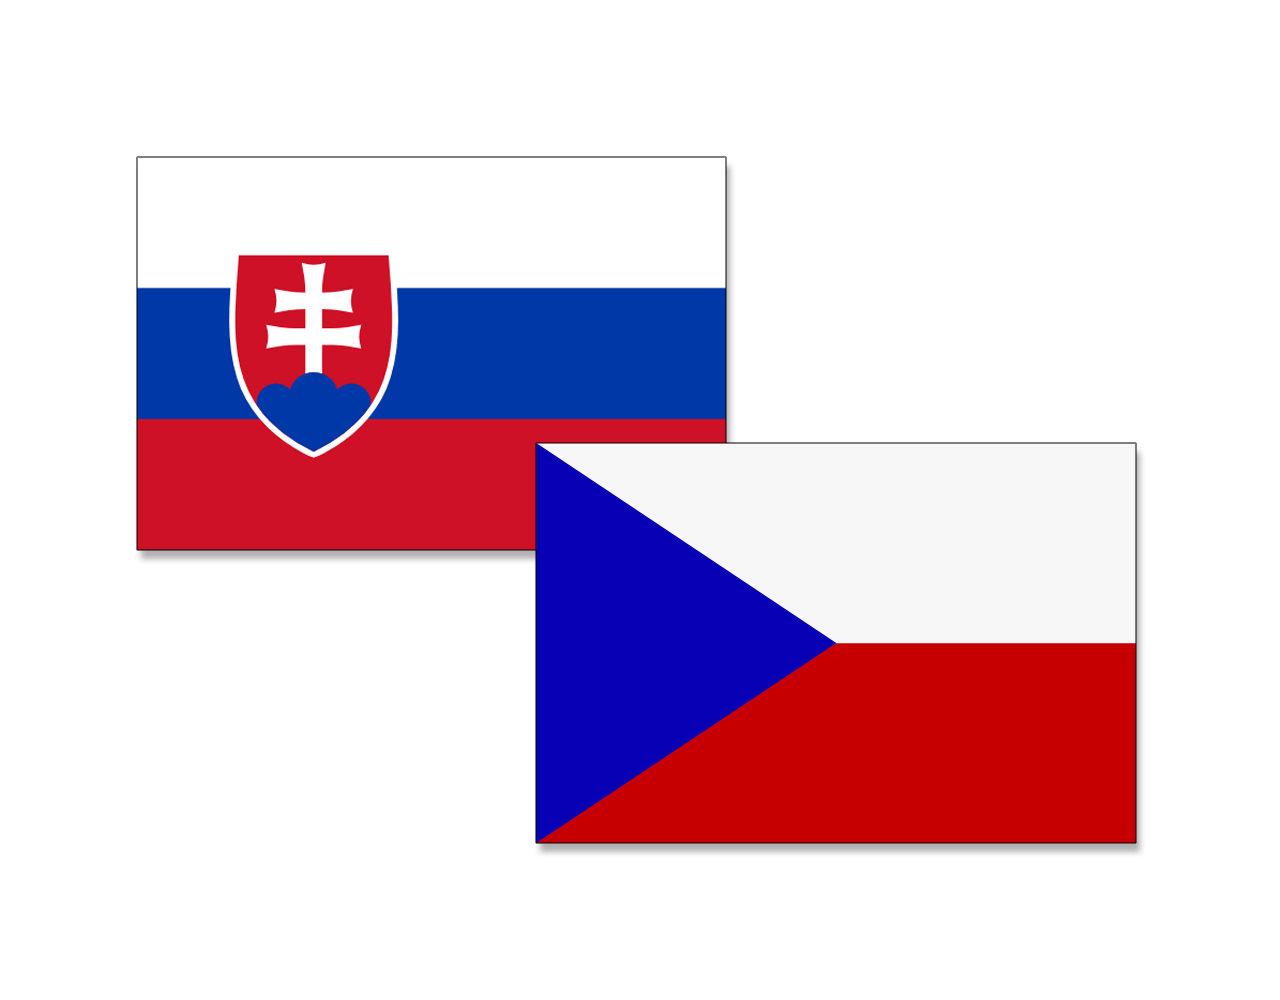 The flags of Slovenia & Czechia